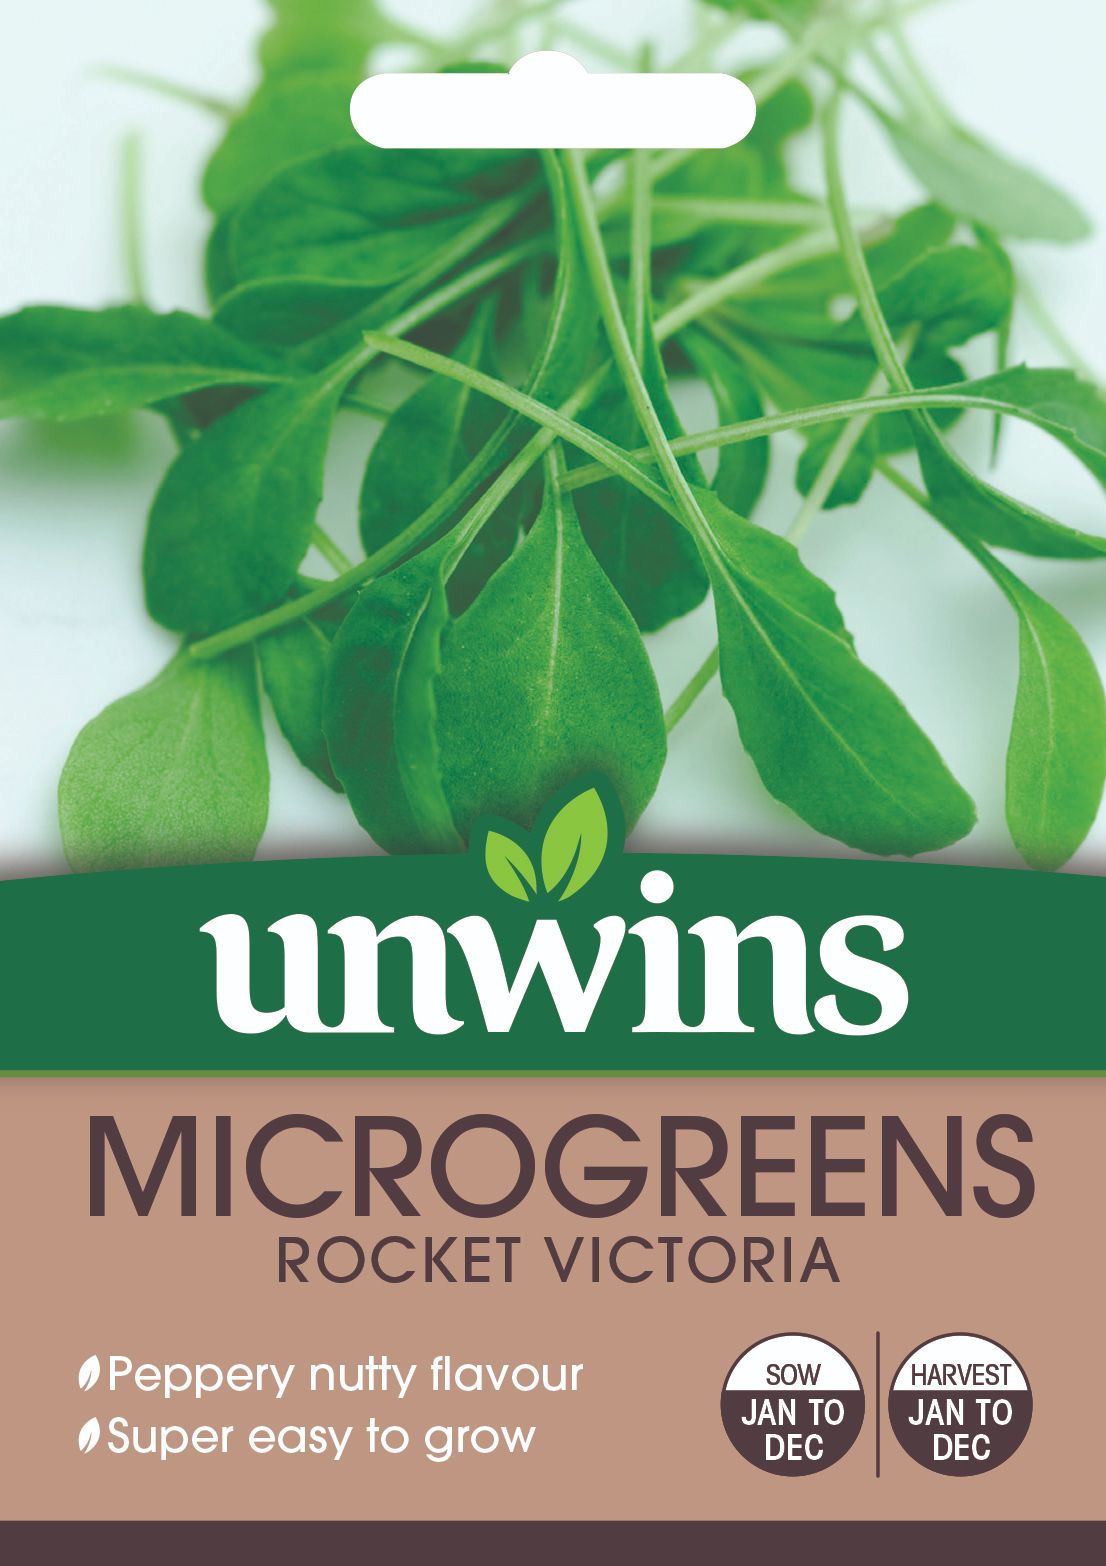 MicroGreens Rocket Victoria